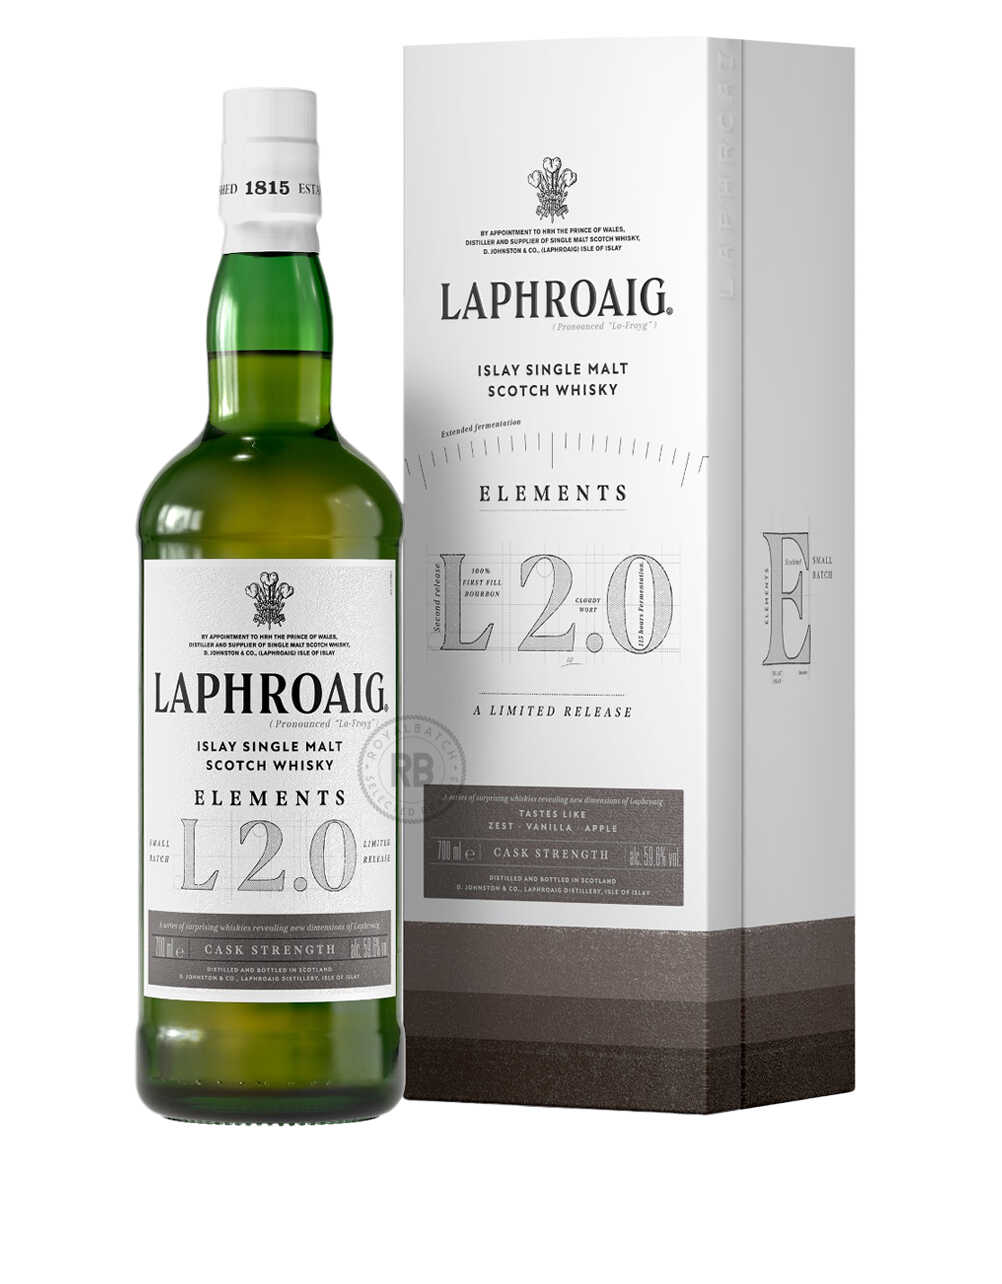 Laphroaig Elements 2.0 Limited Release Scotch Whisky